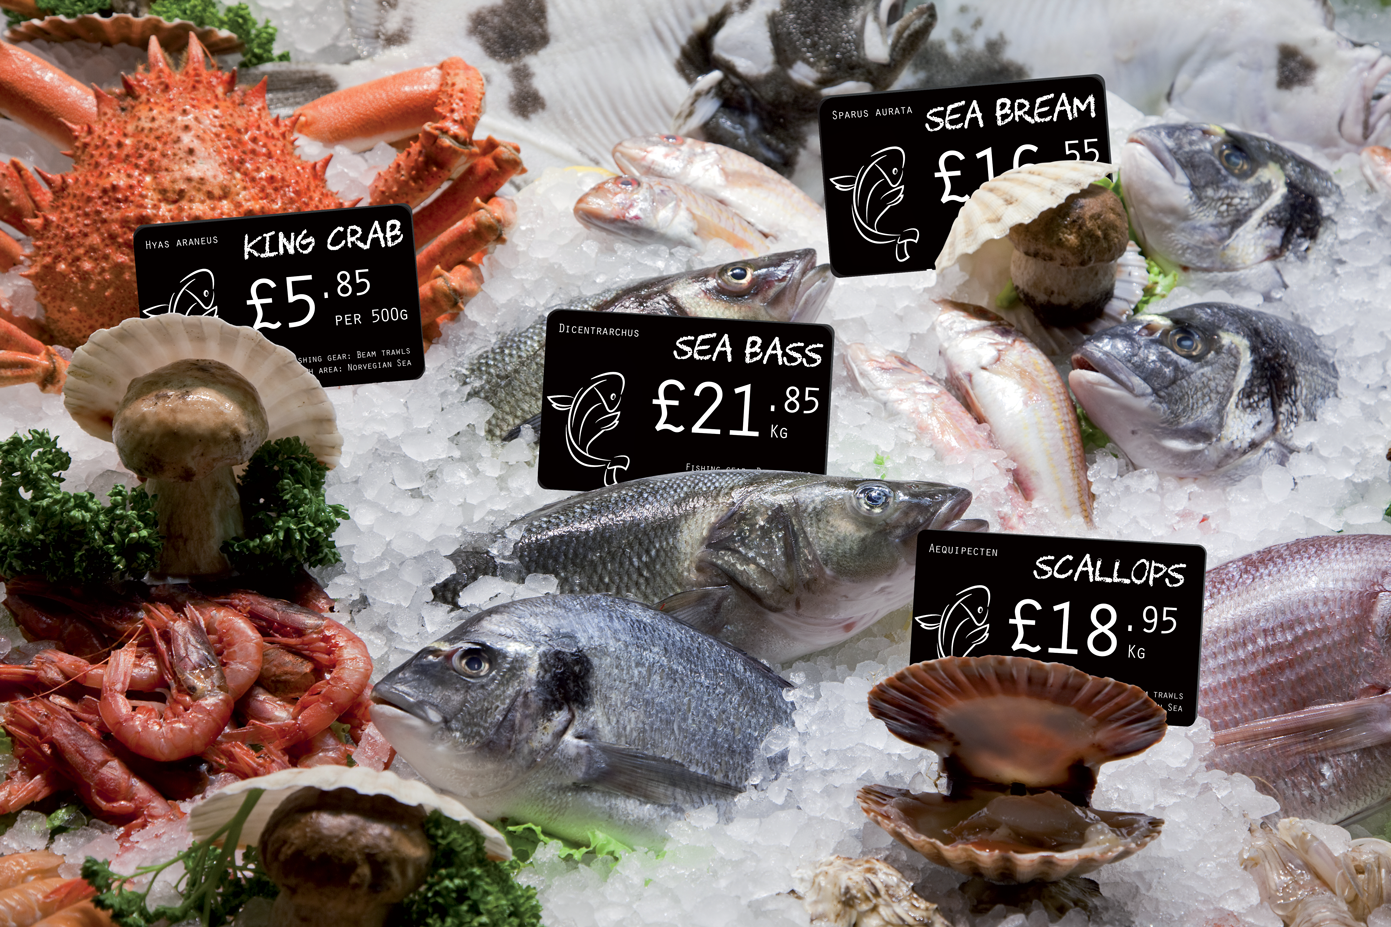 Price tags for fishmongers in situ